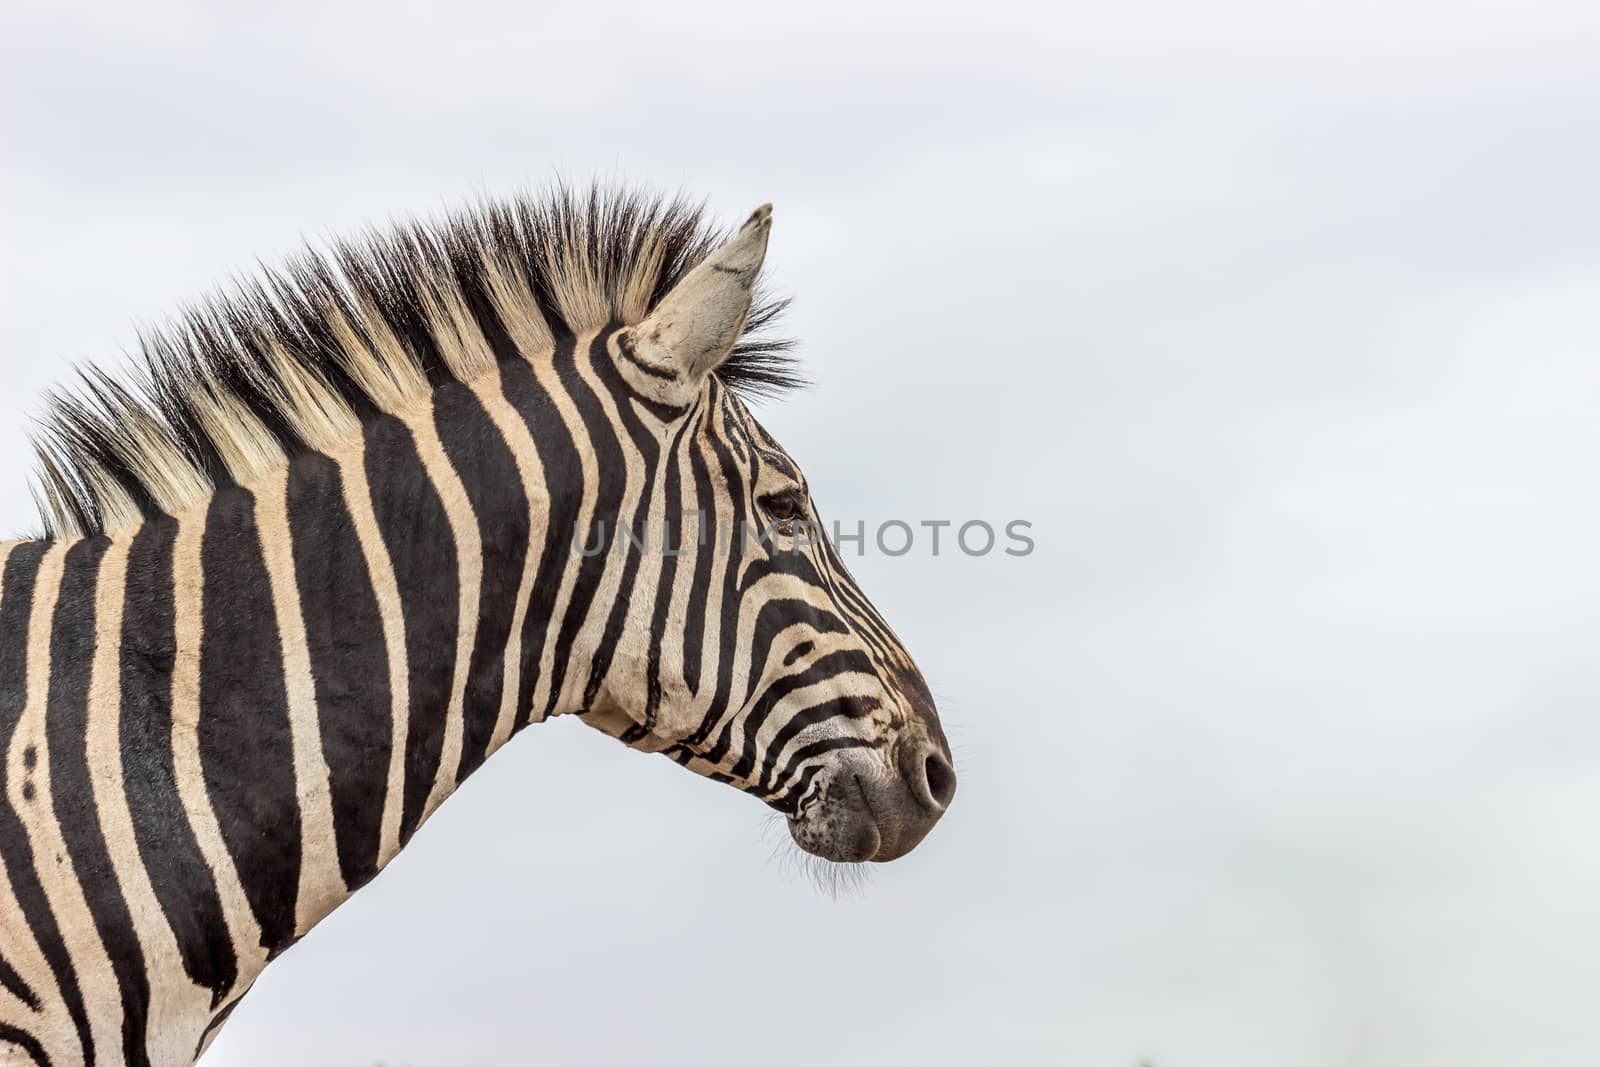 Burchels Zebra in Pilanesberg National park by RiaanAlbrecht